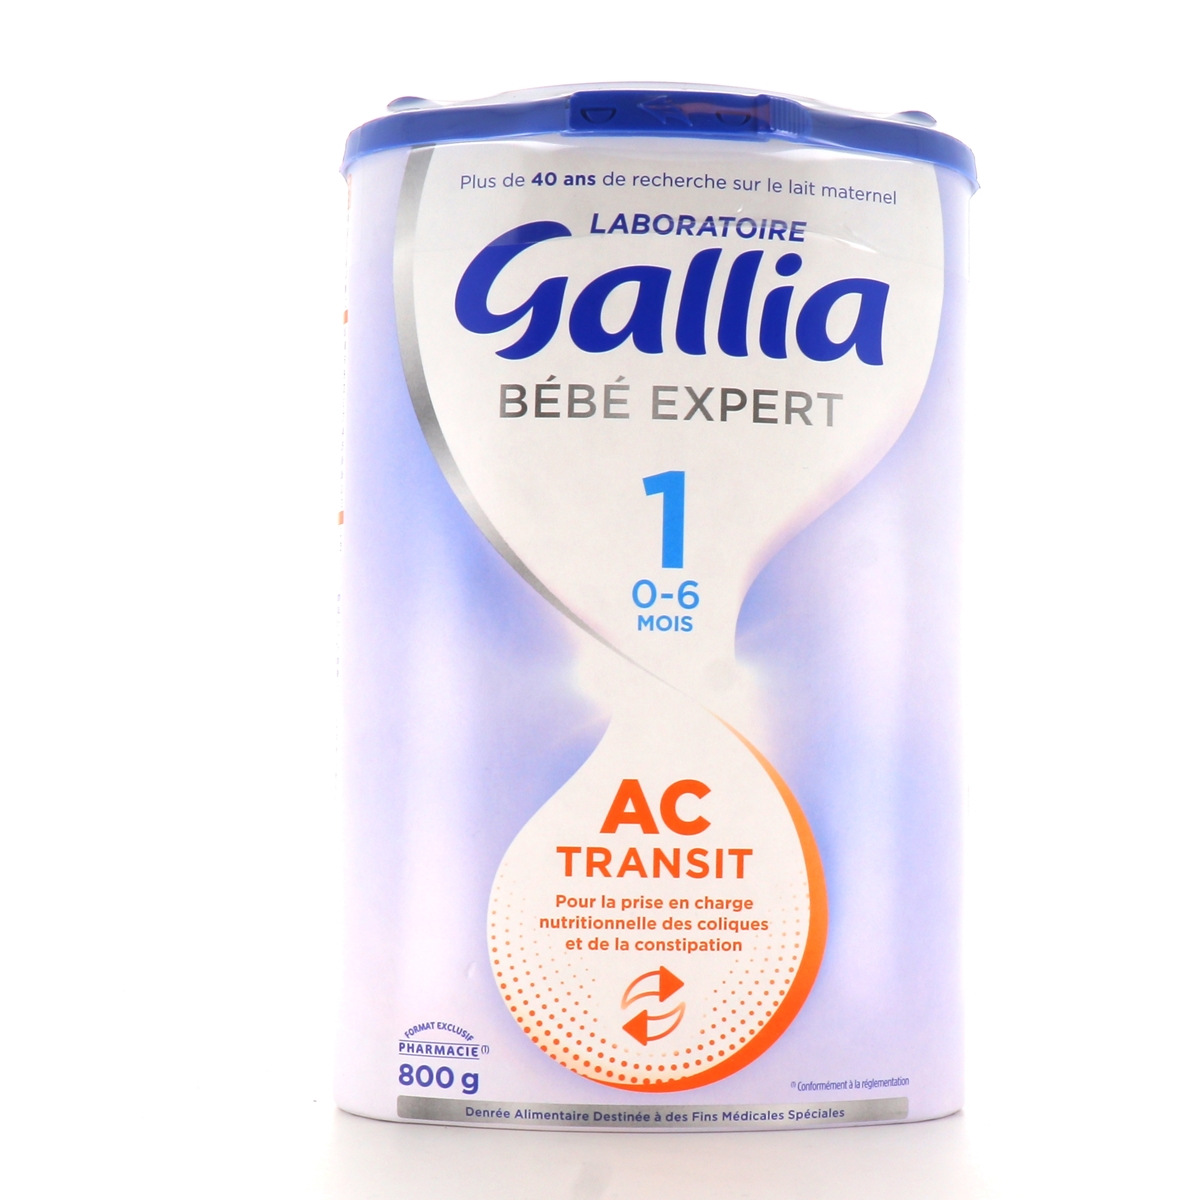 Gallia Procesa lait 1er âge